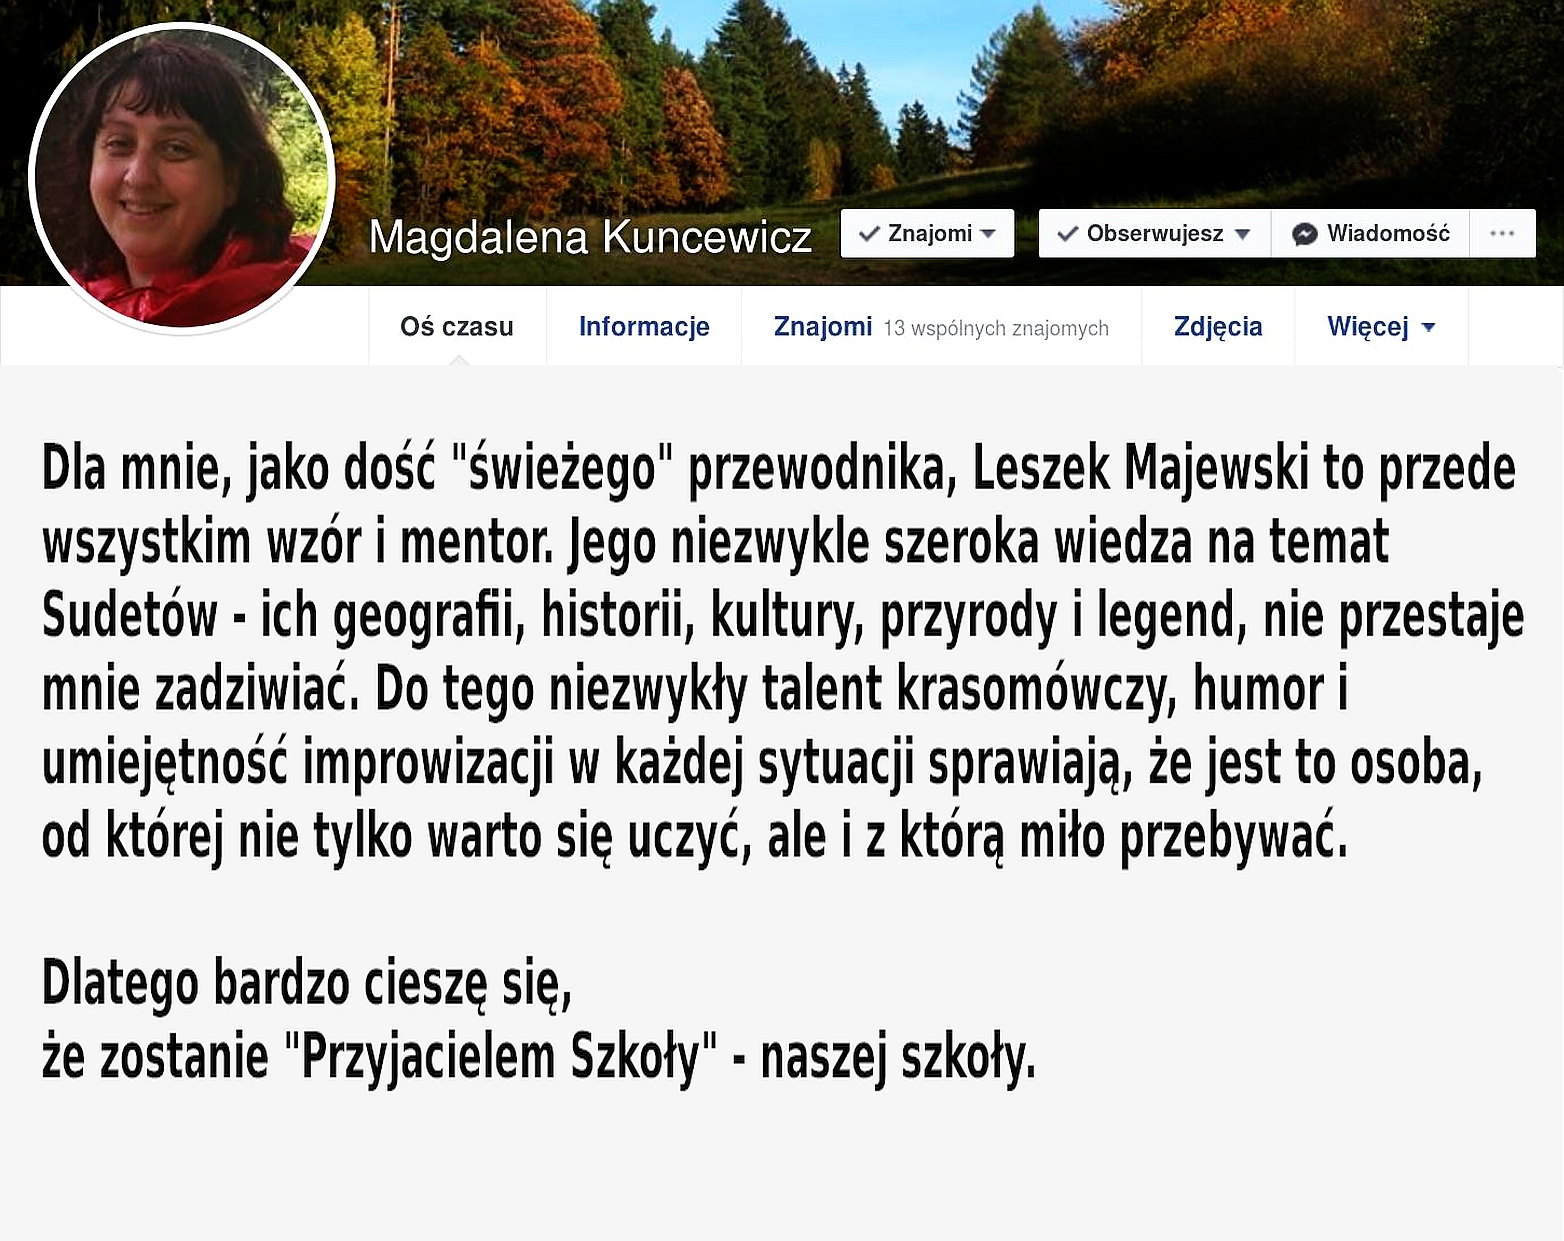 03.Magdalena Kuncewicz